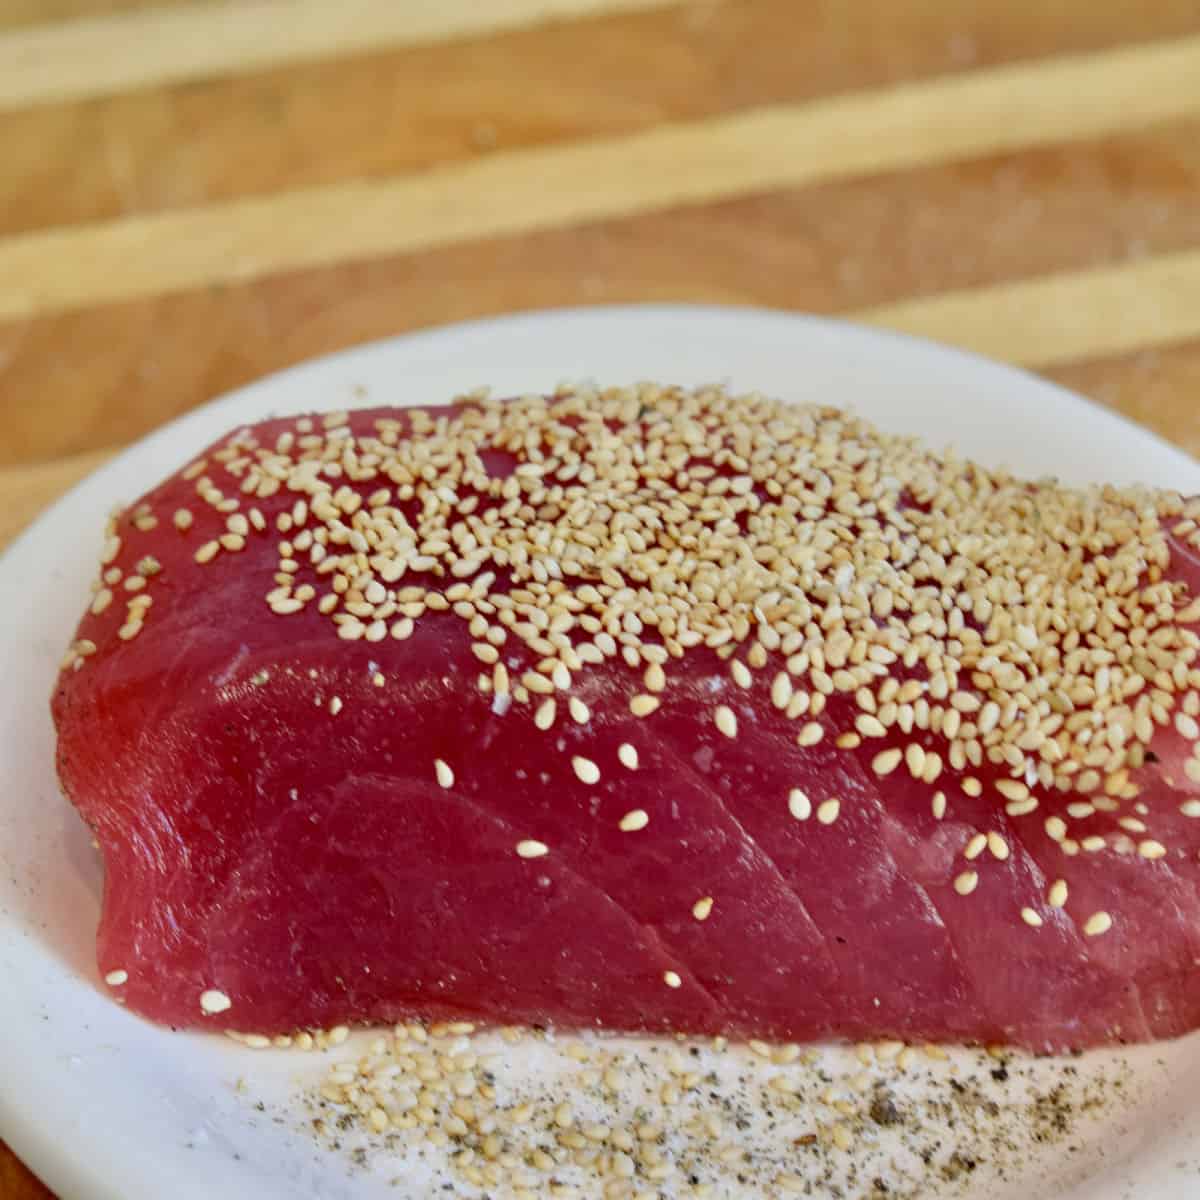 A piece of ahi tuna with sesame seeds on it.